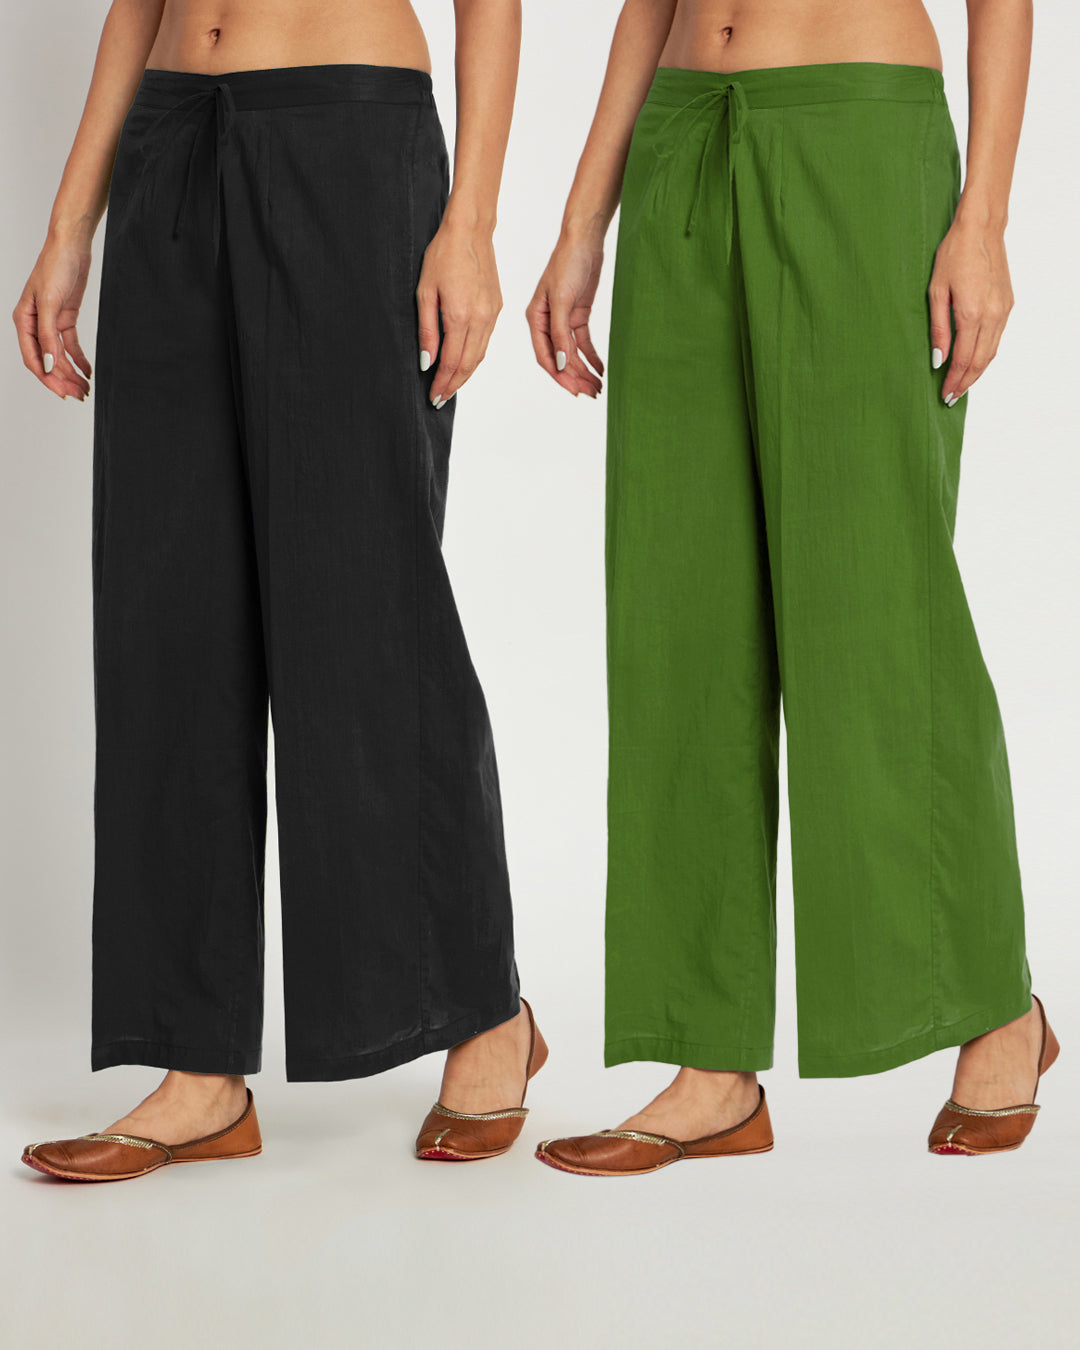 Combo: Black & Greening Spring Wide Pants- Set Of 2